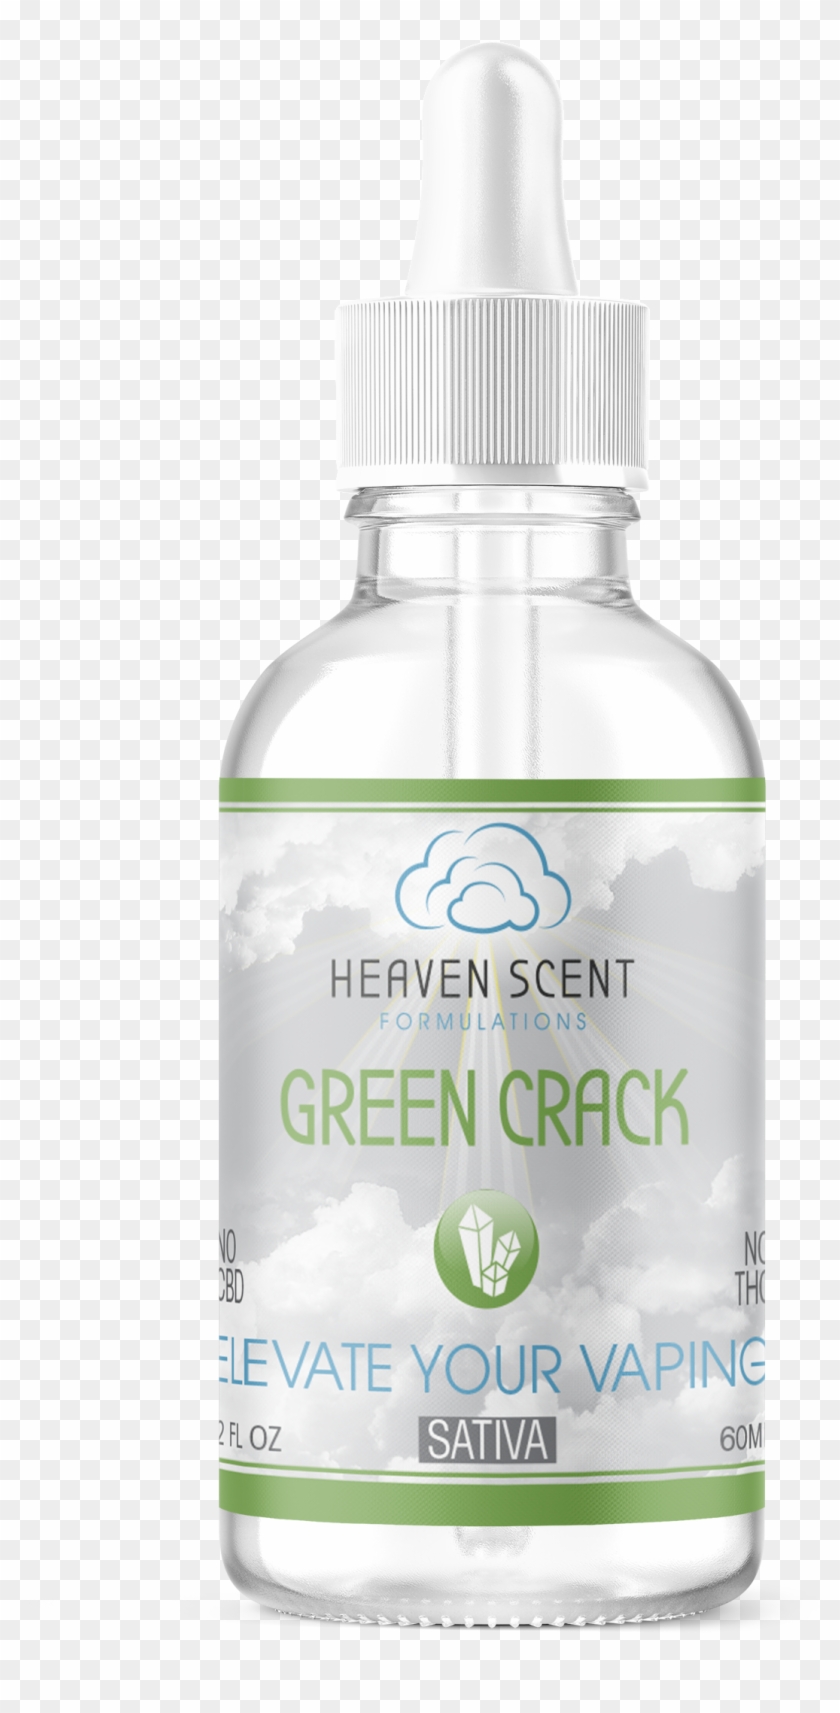 Green Crack - Hernö Gin Old Tom Clipart #4685015